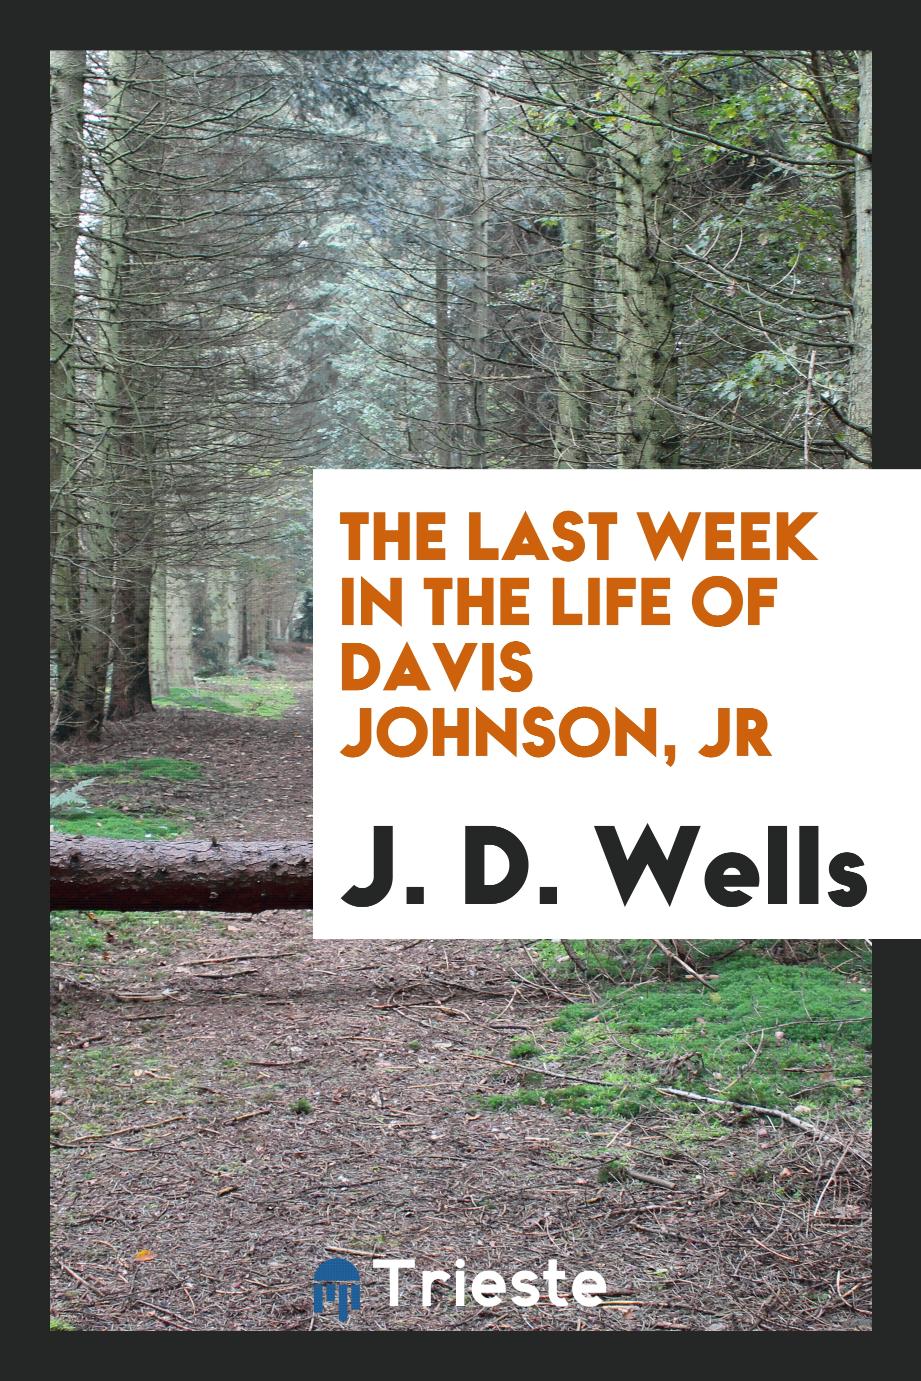 The last week in the life of Davis Johnson, Jr